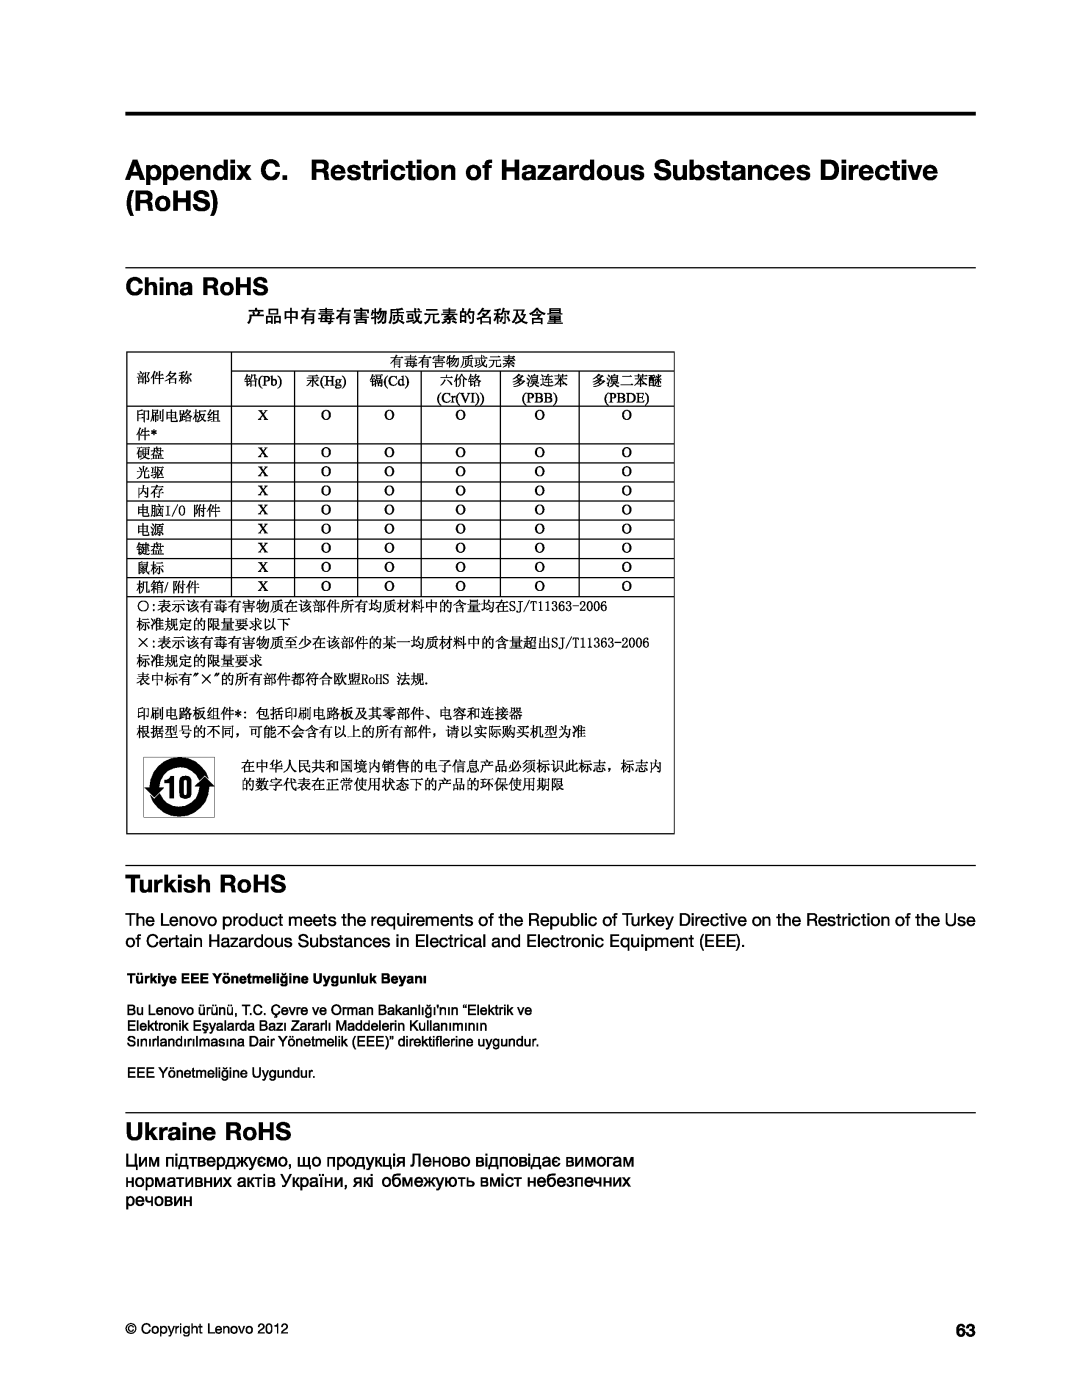 Lenovo 59366616 Appendix C. Restriction of Hazardous Substances Directive RoHS, China RoHS Turkish RoHS, Ukraine RoHS 